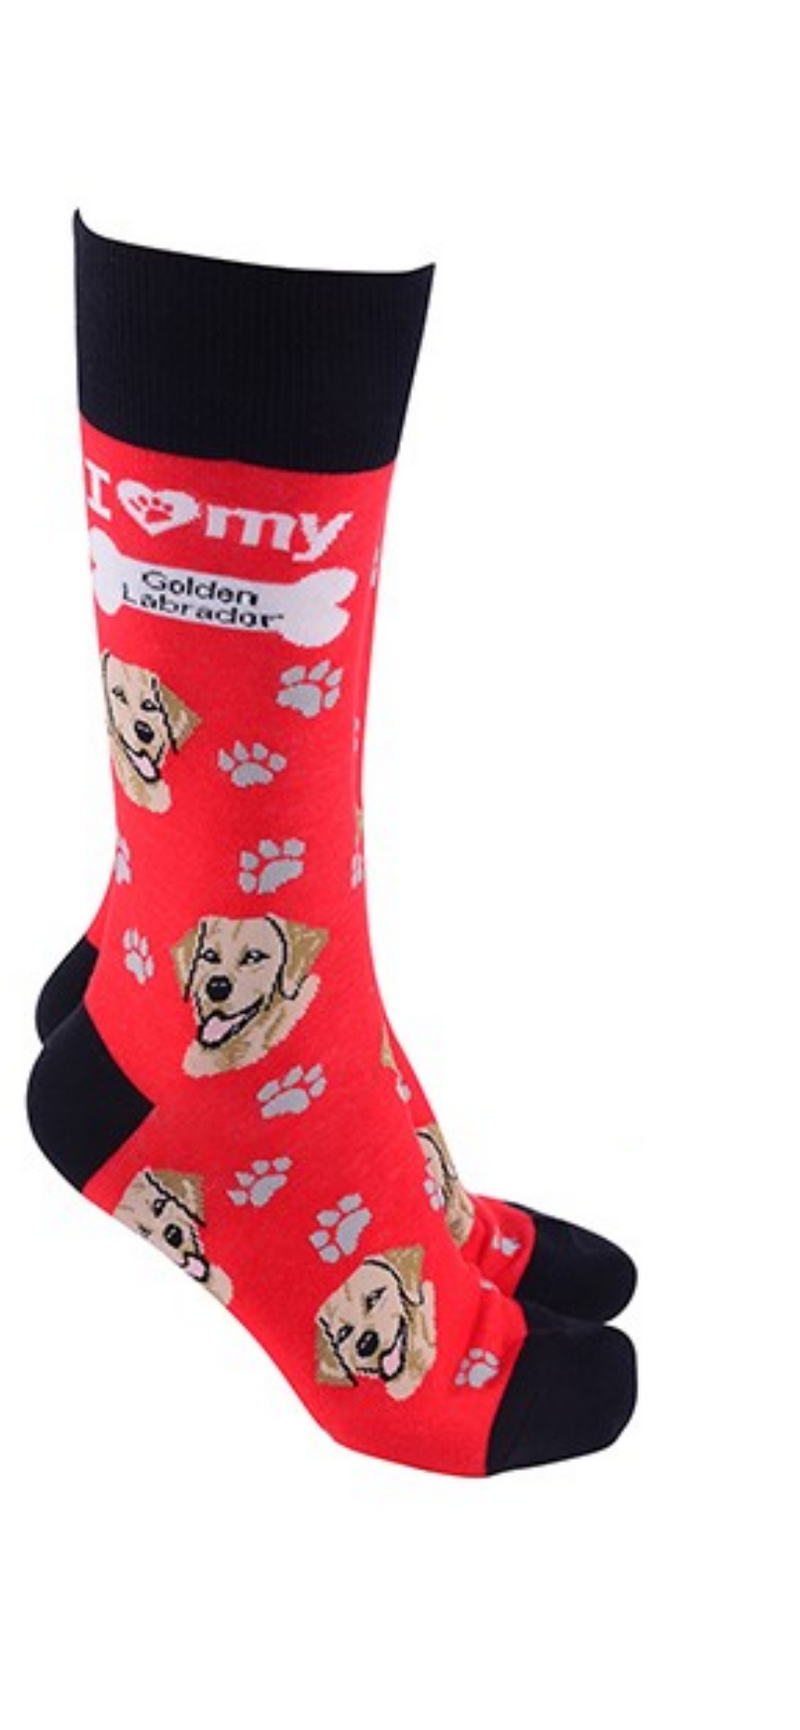 Golden Labrador design socks with 'I love my Golden Labrador' text, quality Unisex One Size stocking filler